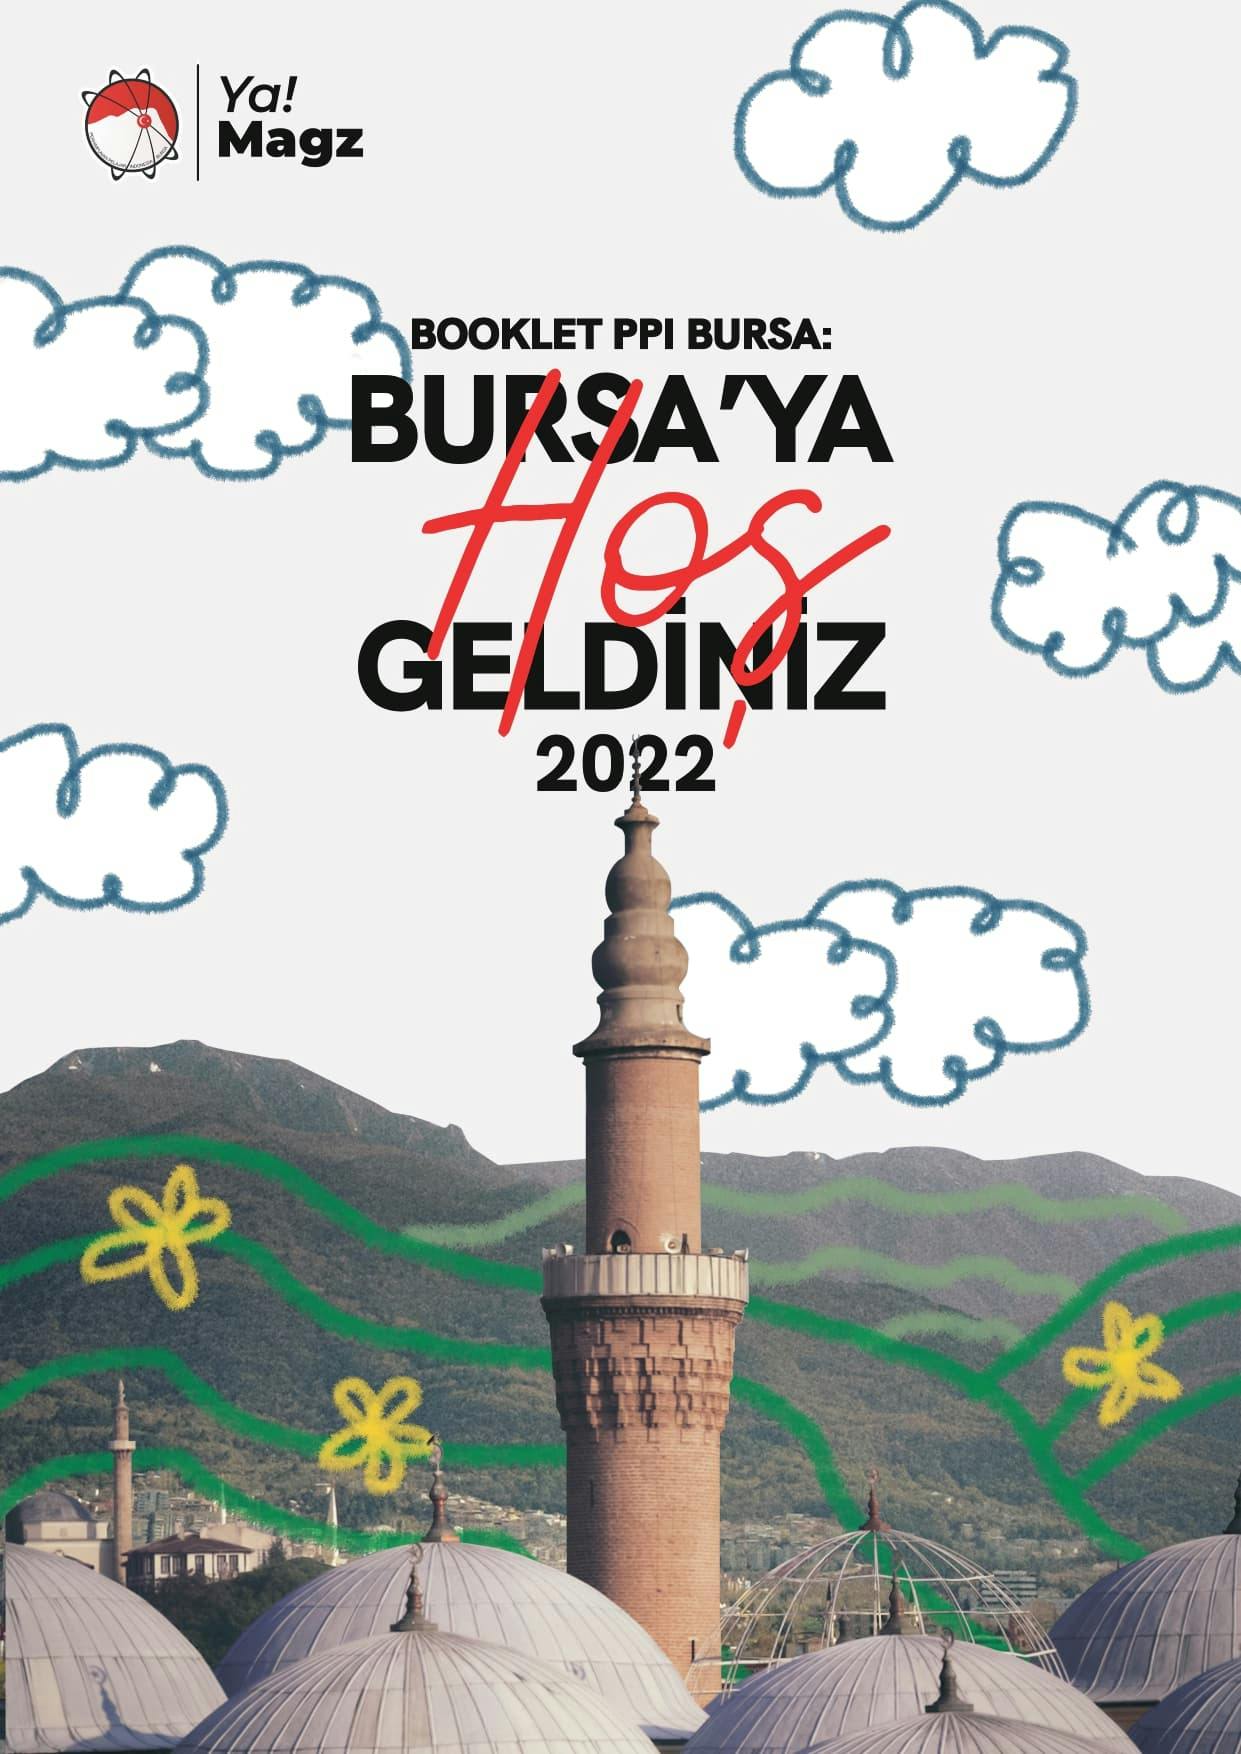 Booklet PPI Bursa 2022